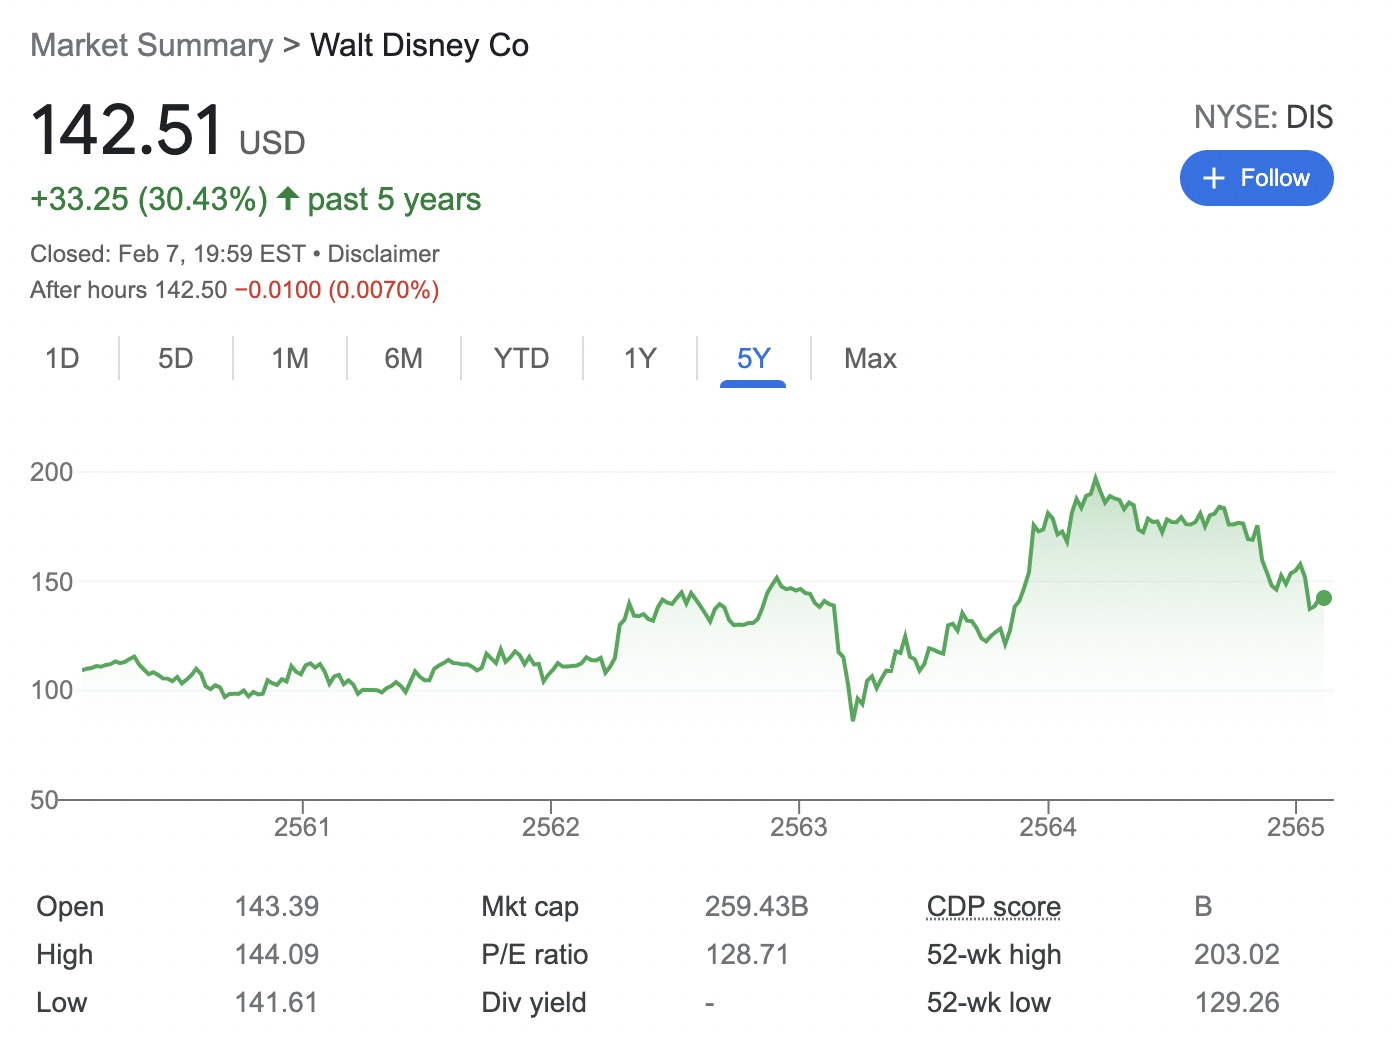 Walt Disney stocks